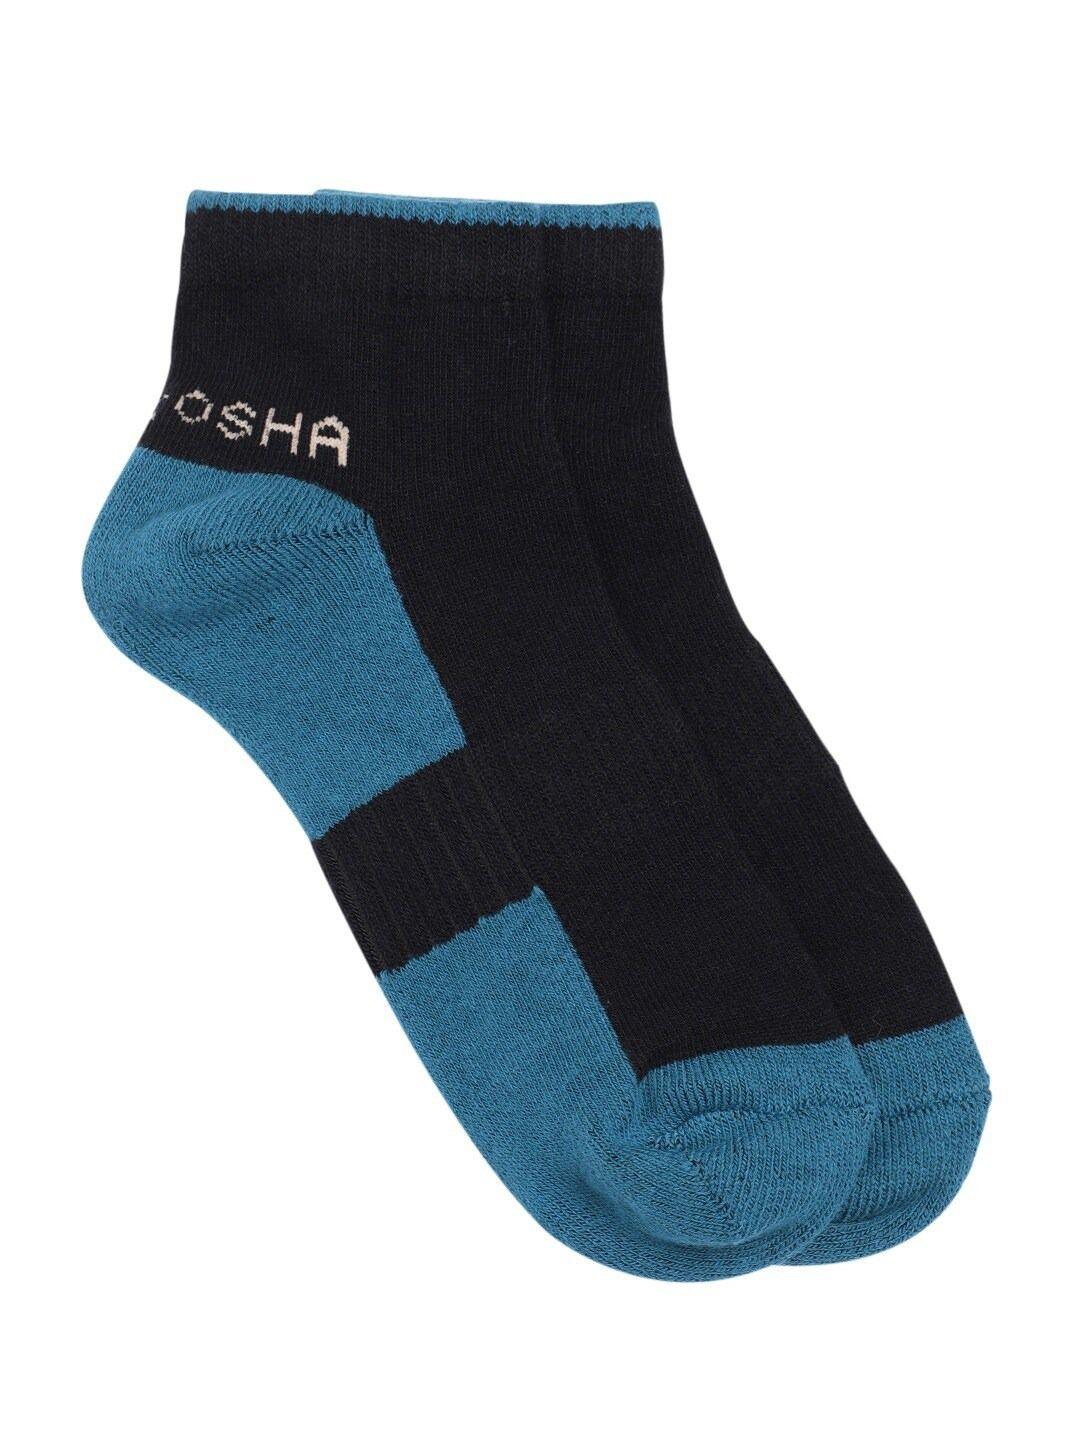 kosha men turquoise blue & black colourblocked ankle length cushioned cotton sports socks